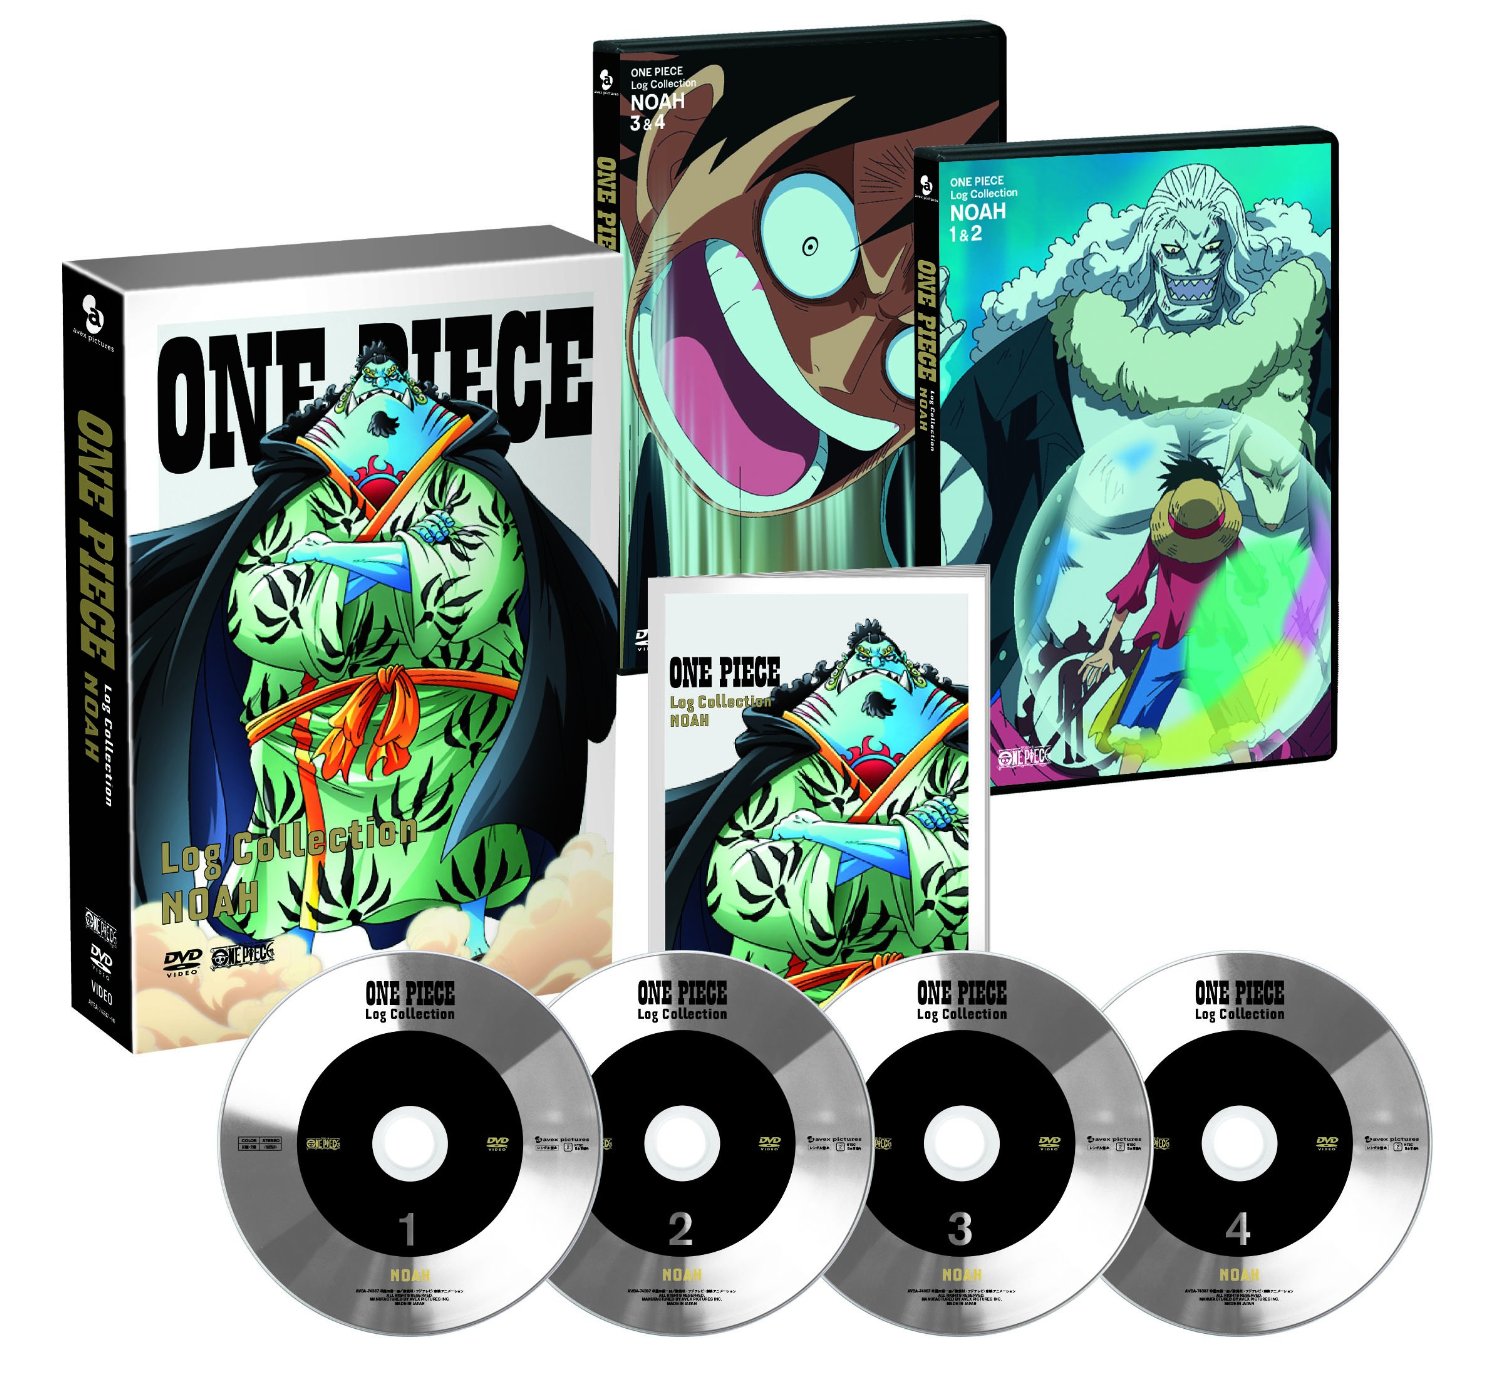 One Piece Log Collection Noah Dvd 15年12月25日発売 予約はココ ワンピース Dvd Log Collection 商品紹介